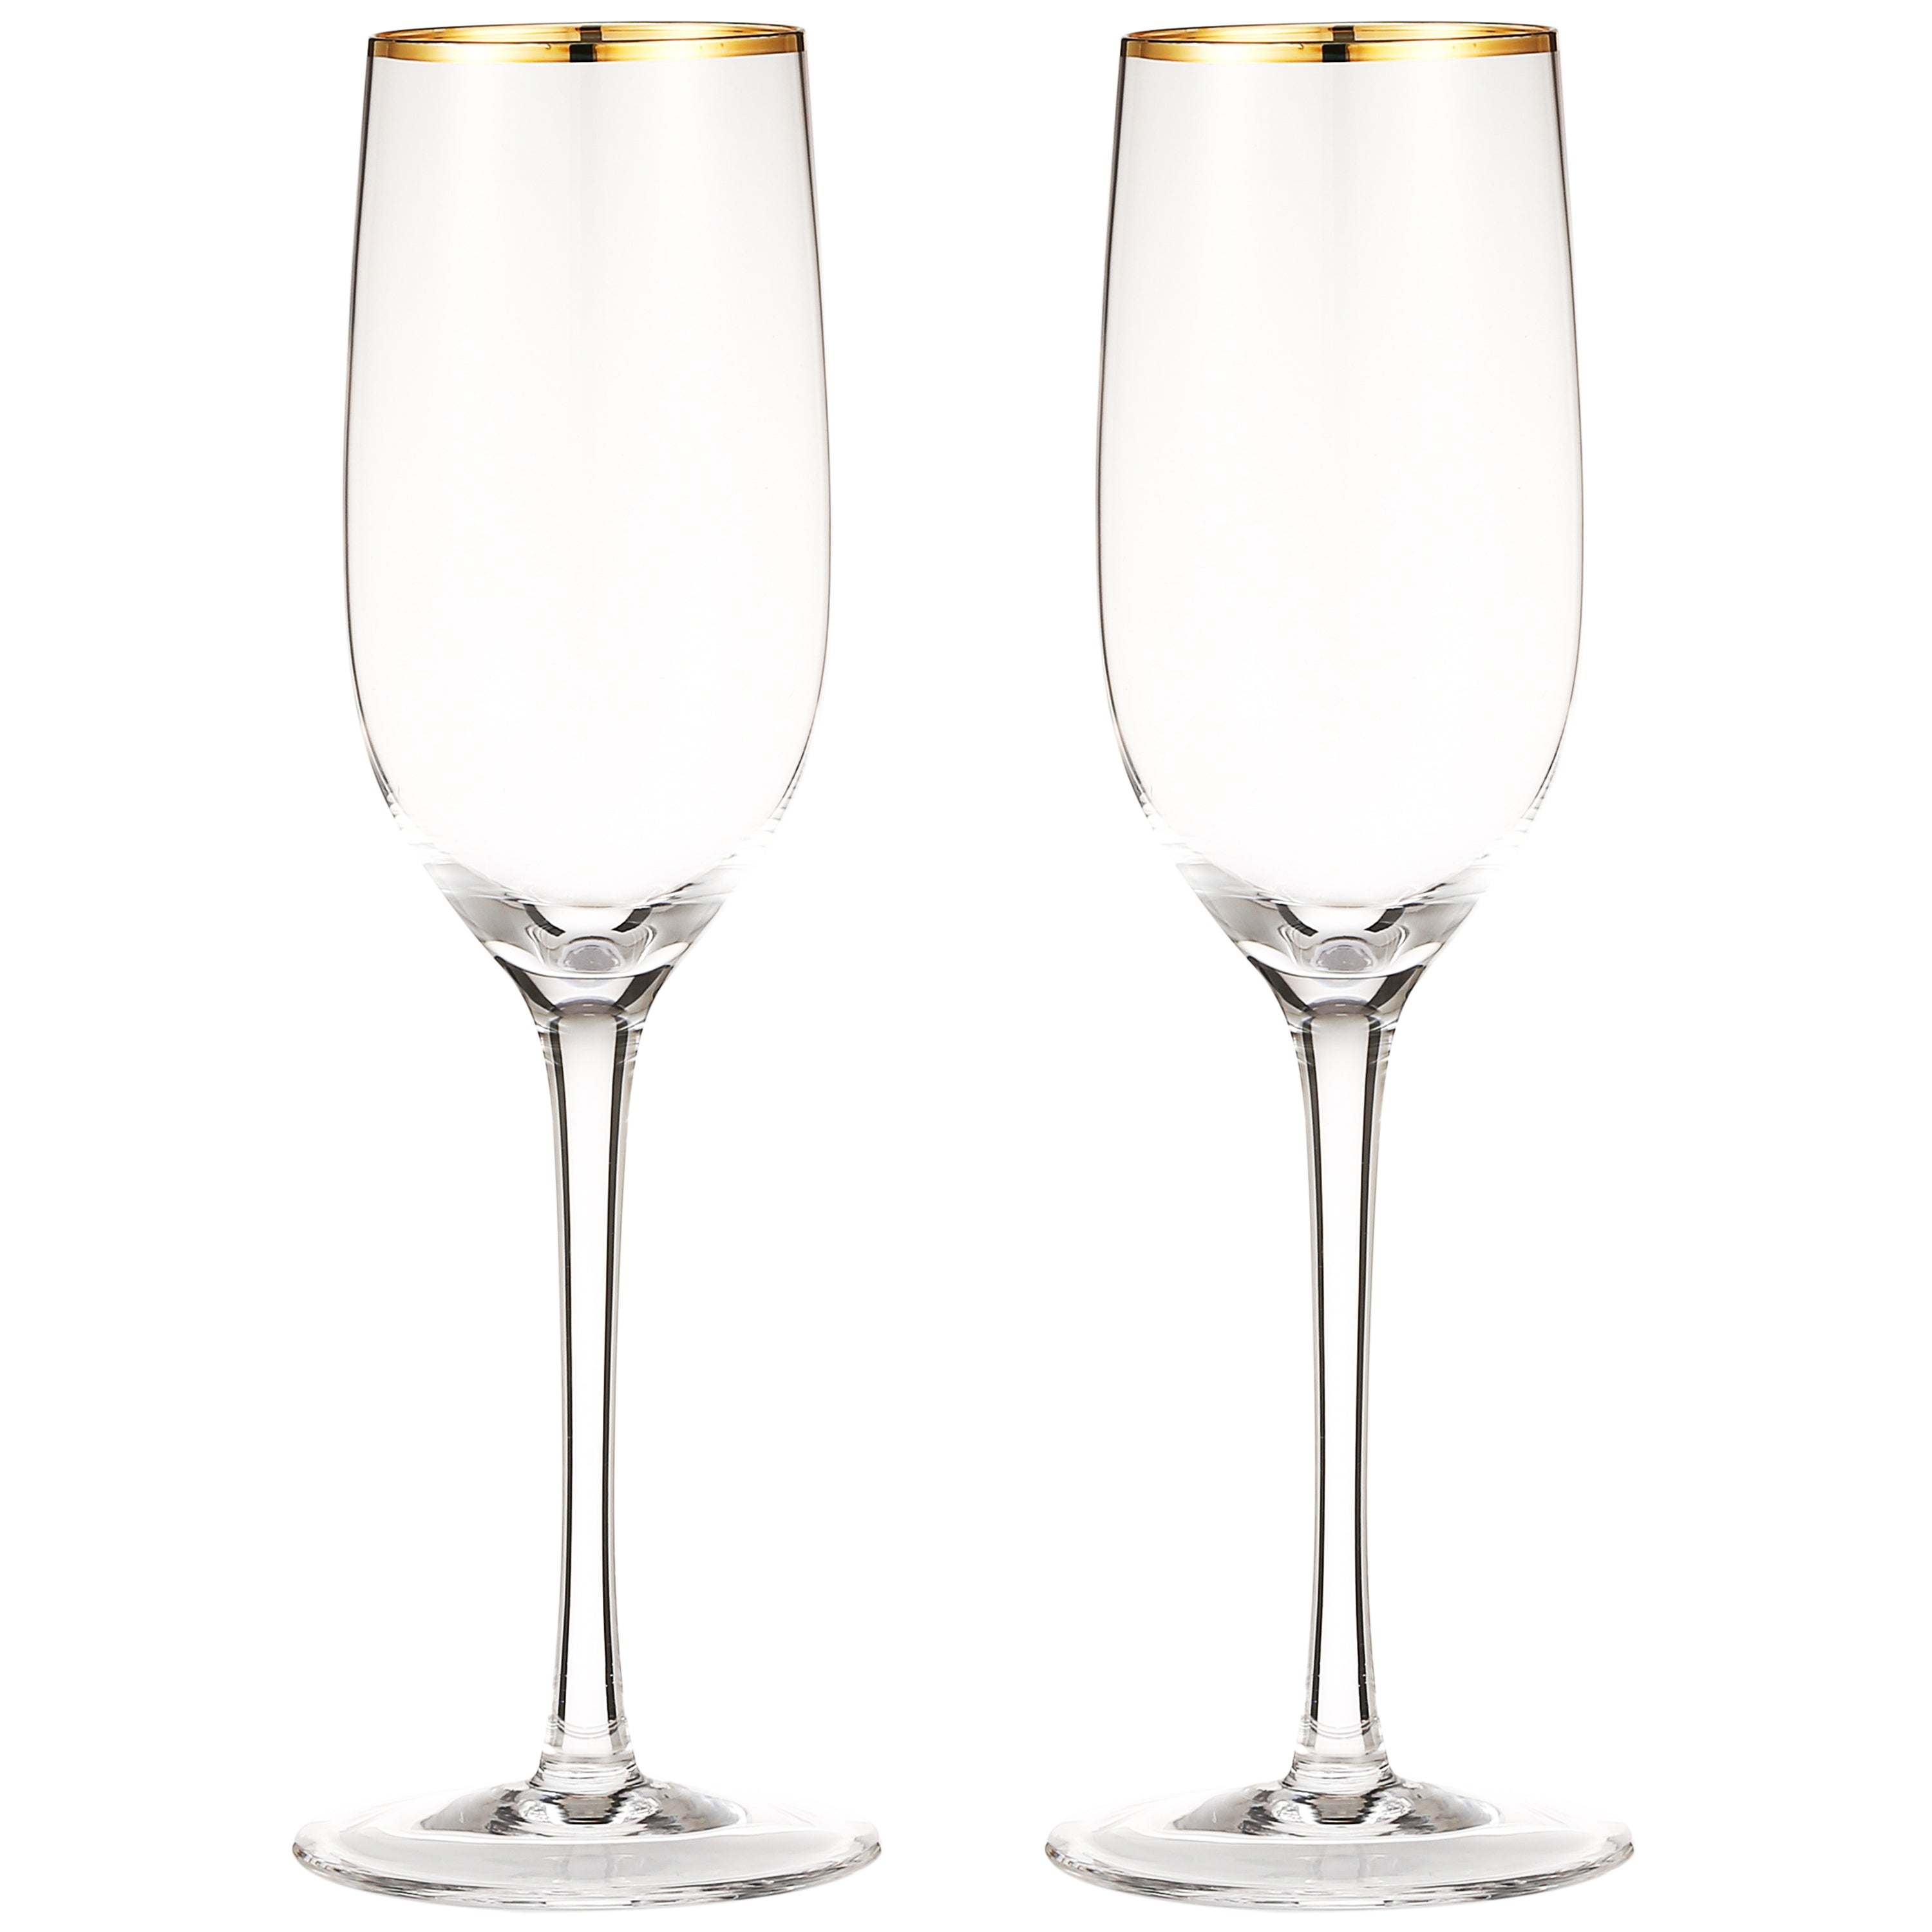 Berkware Wine Glasses - Luxury Crystal Long Stem Toasting Glasses - Set of 4  - Cheer Collection